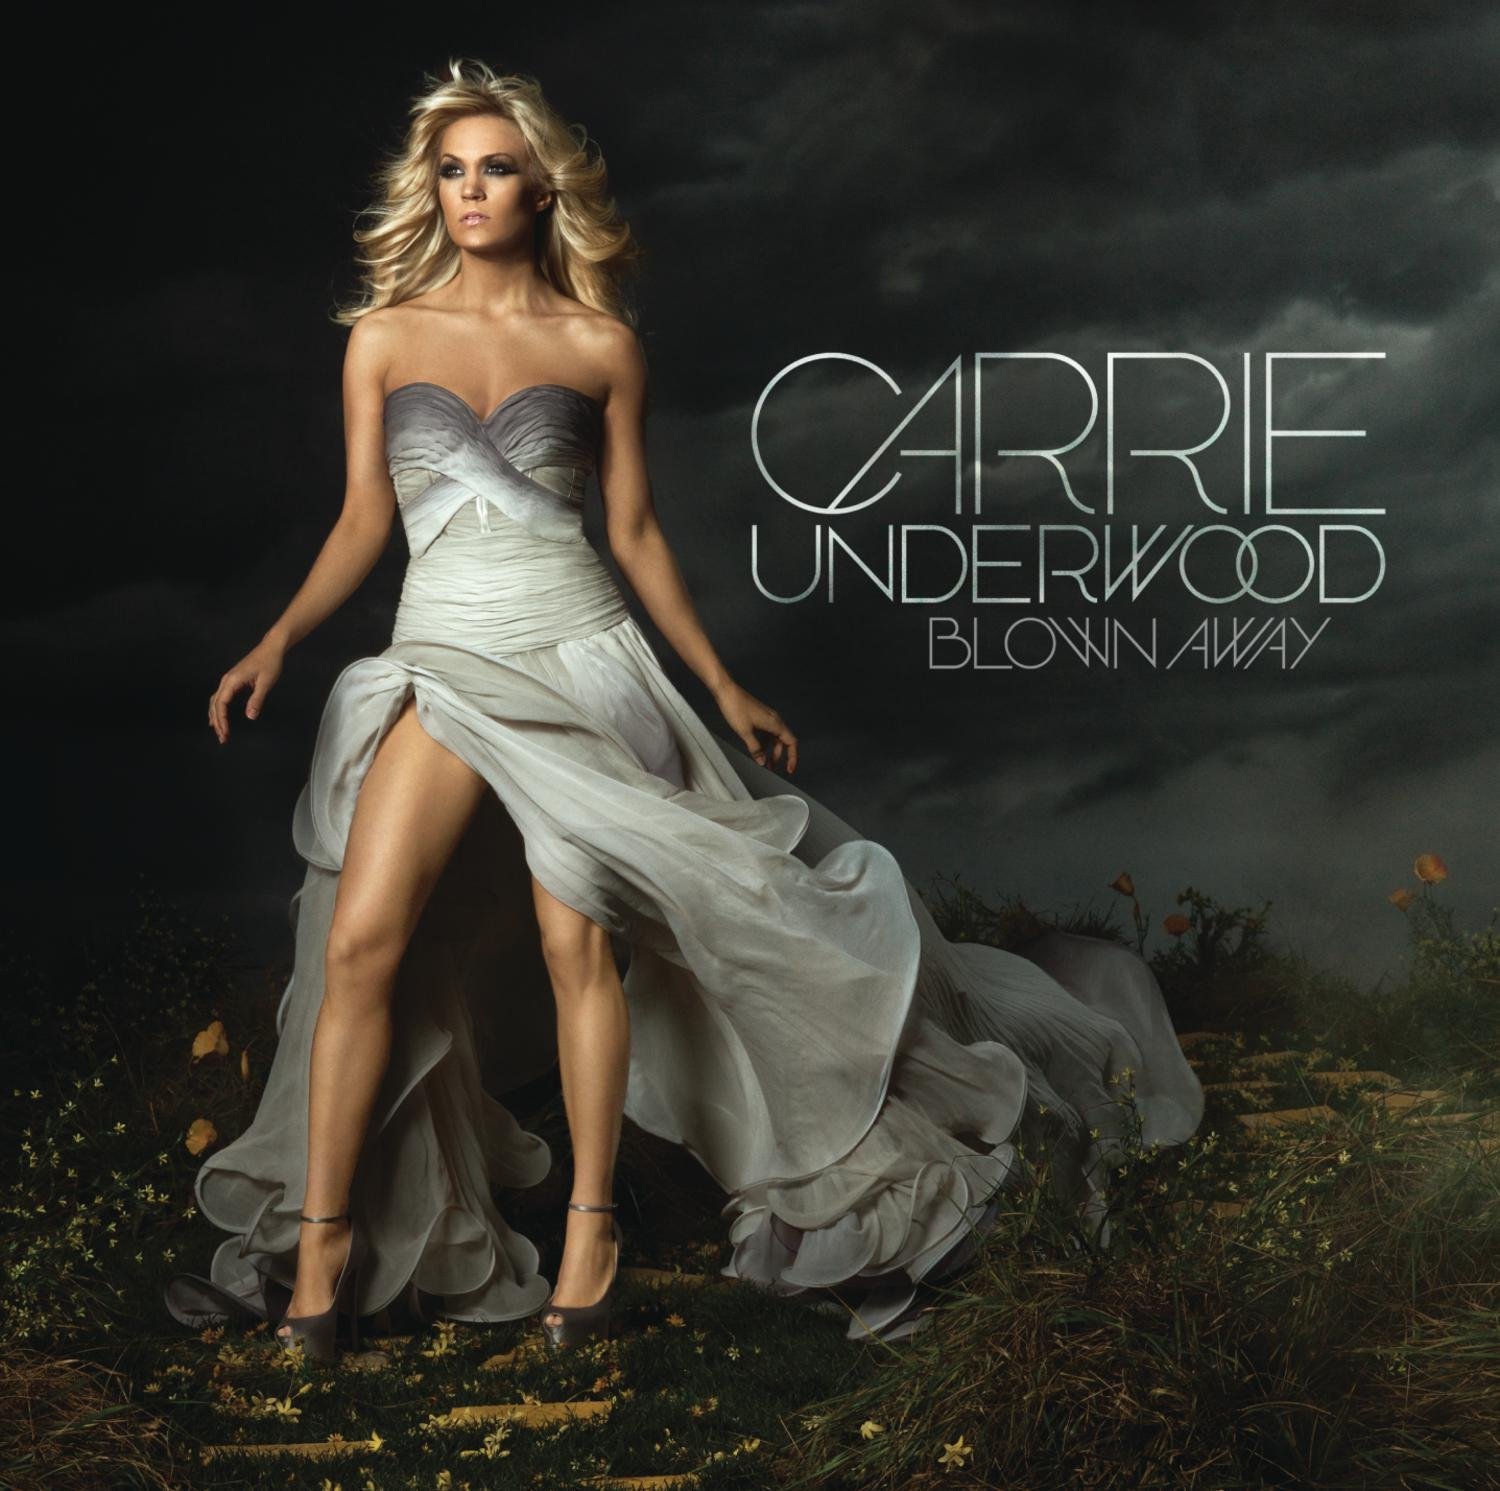 Carrie Underwood - Blown Away - Amazon.com Music